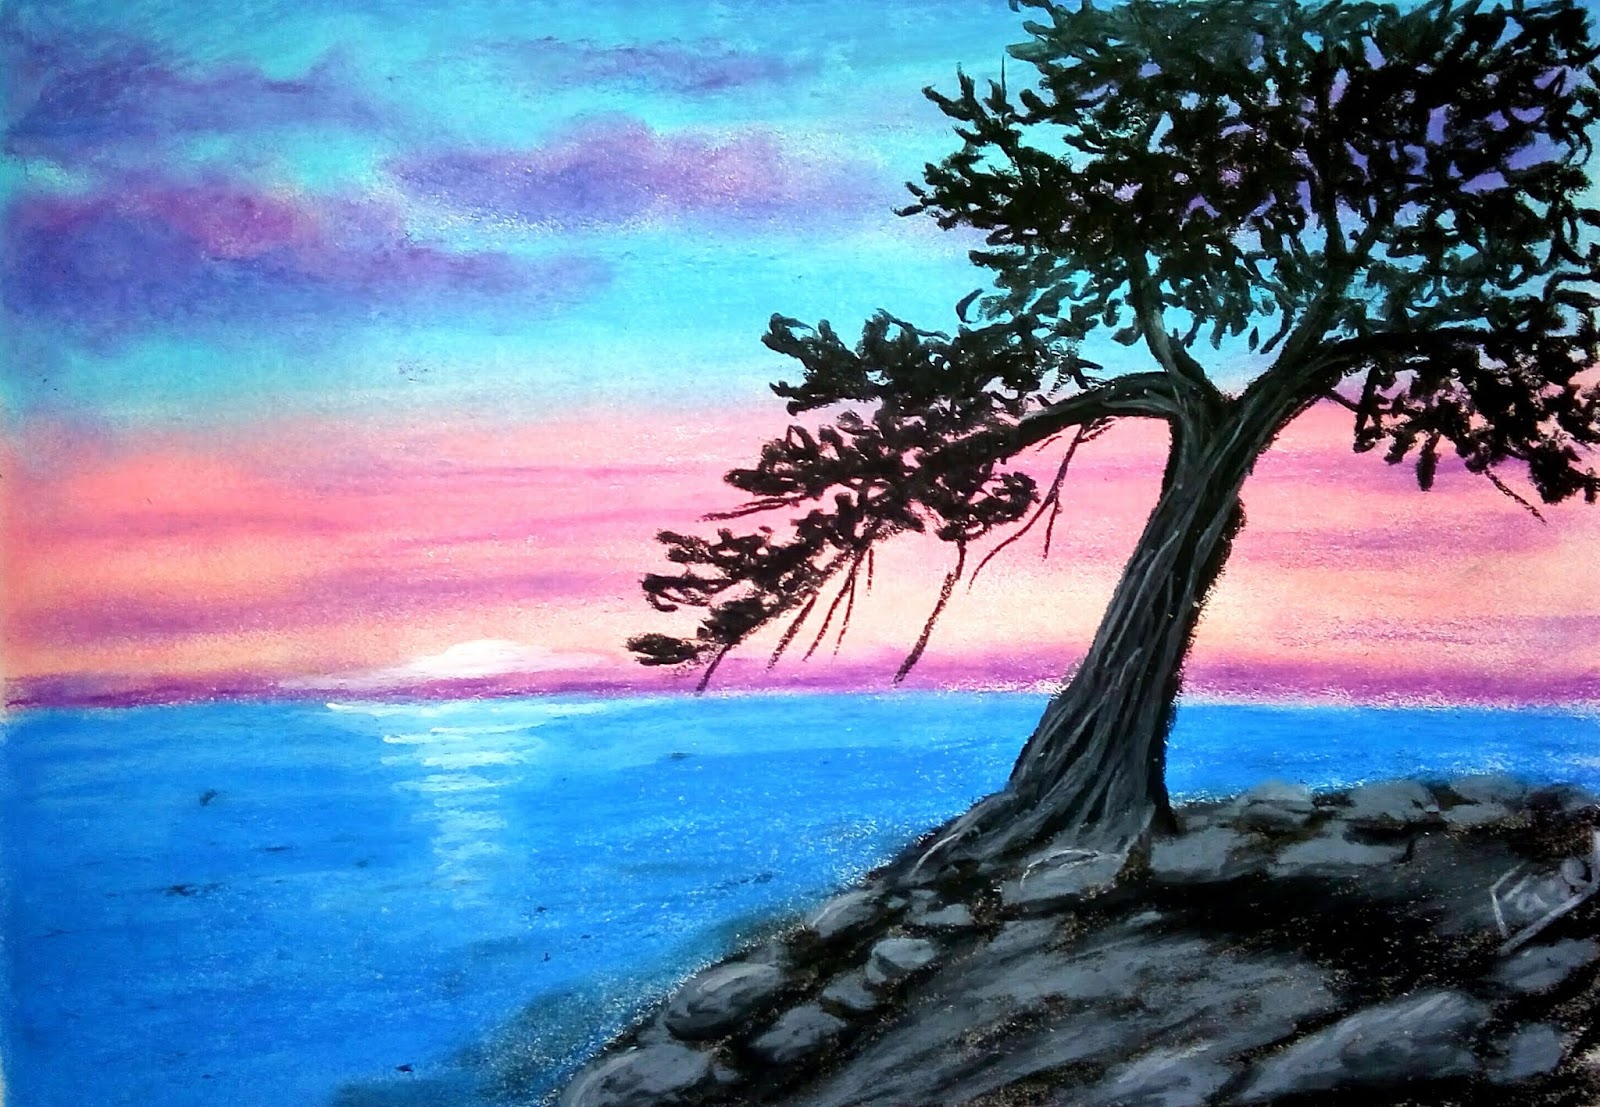 a-beautiful-tree-drawing-sunset-drawing-using-oil-pastel-2020